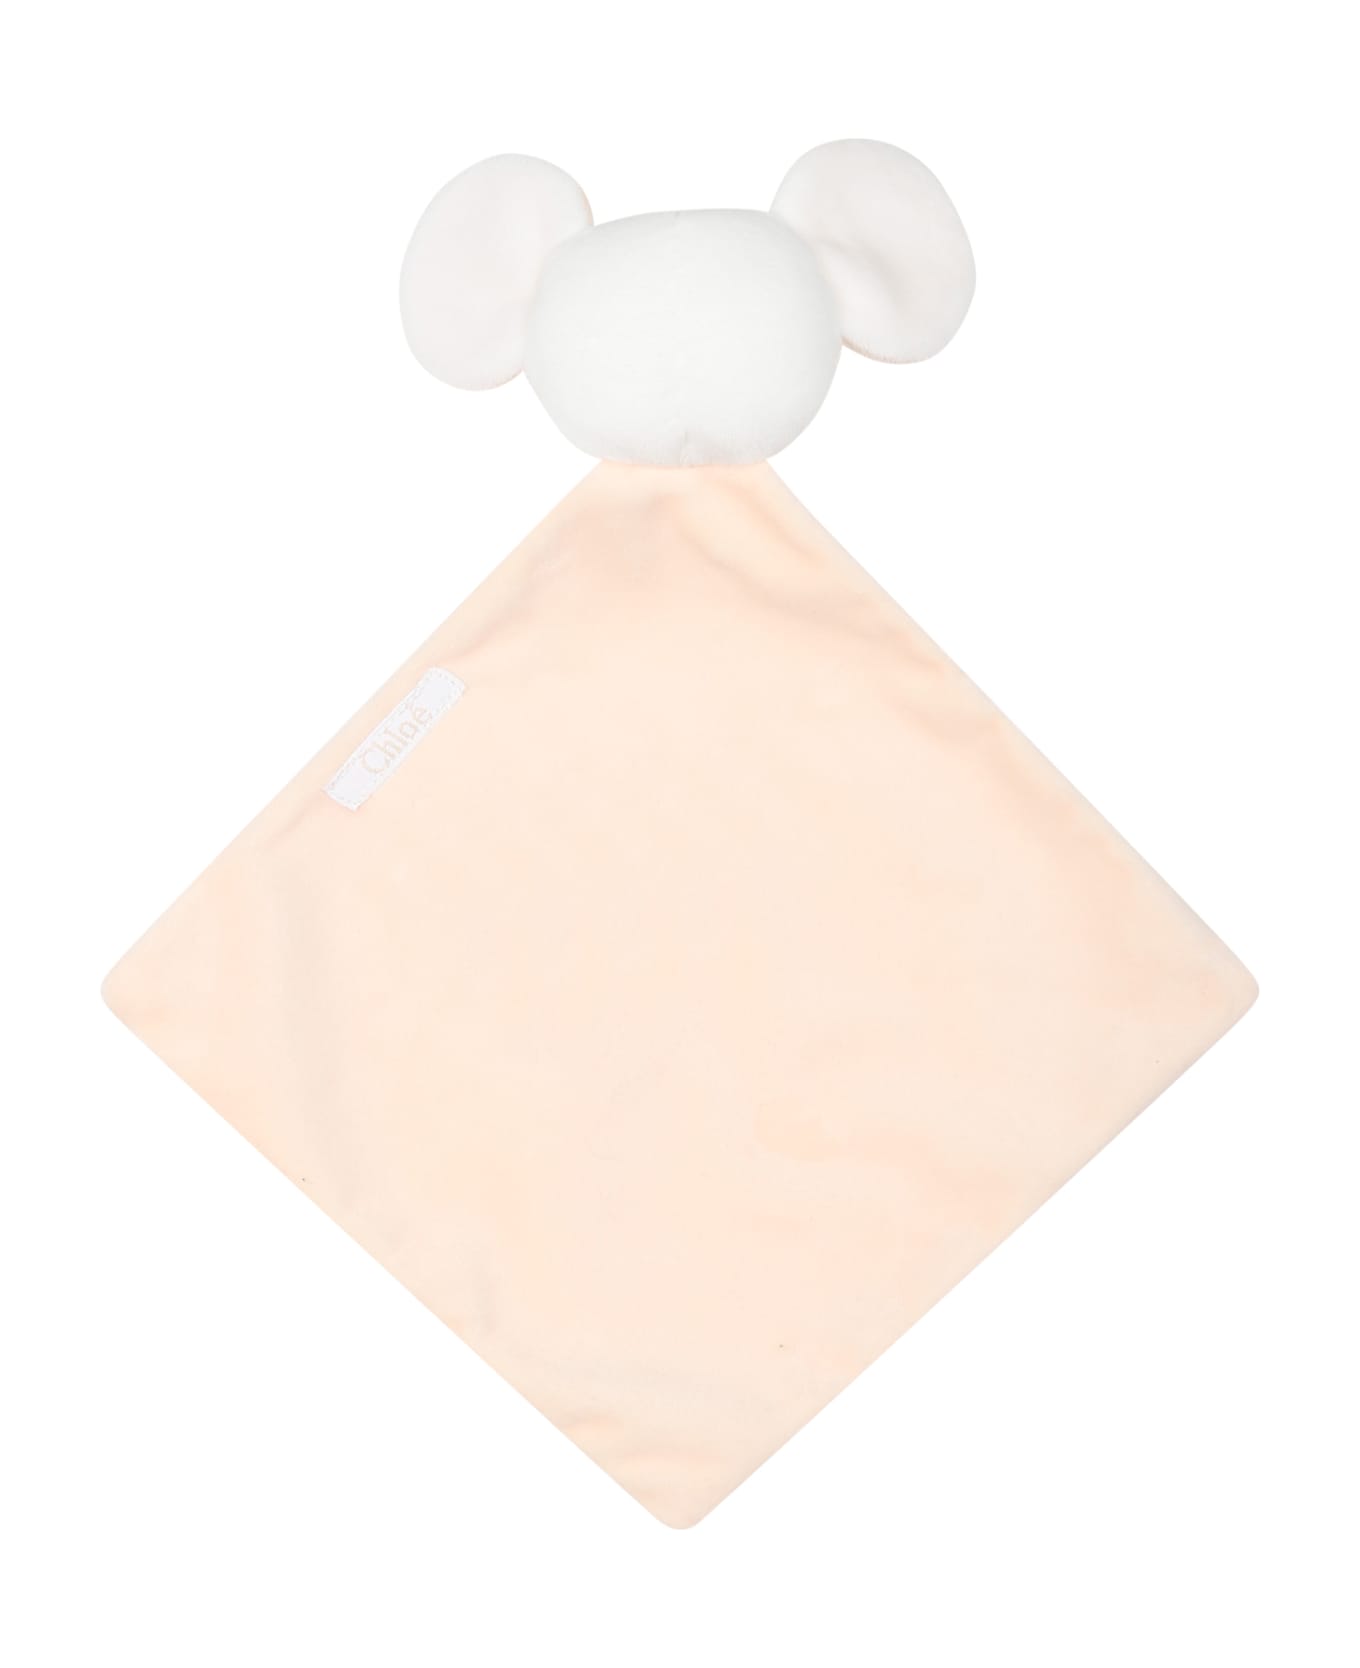 Chloé White Set For Baby Girl With Logo - White